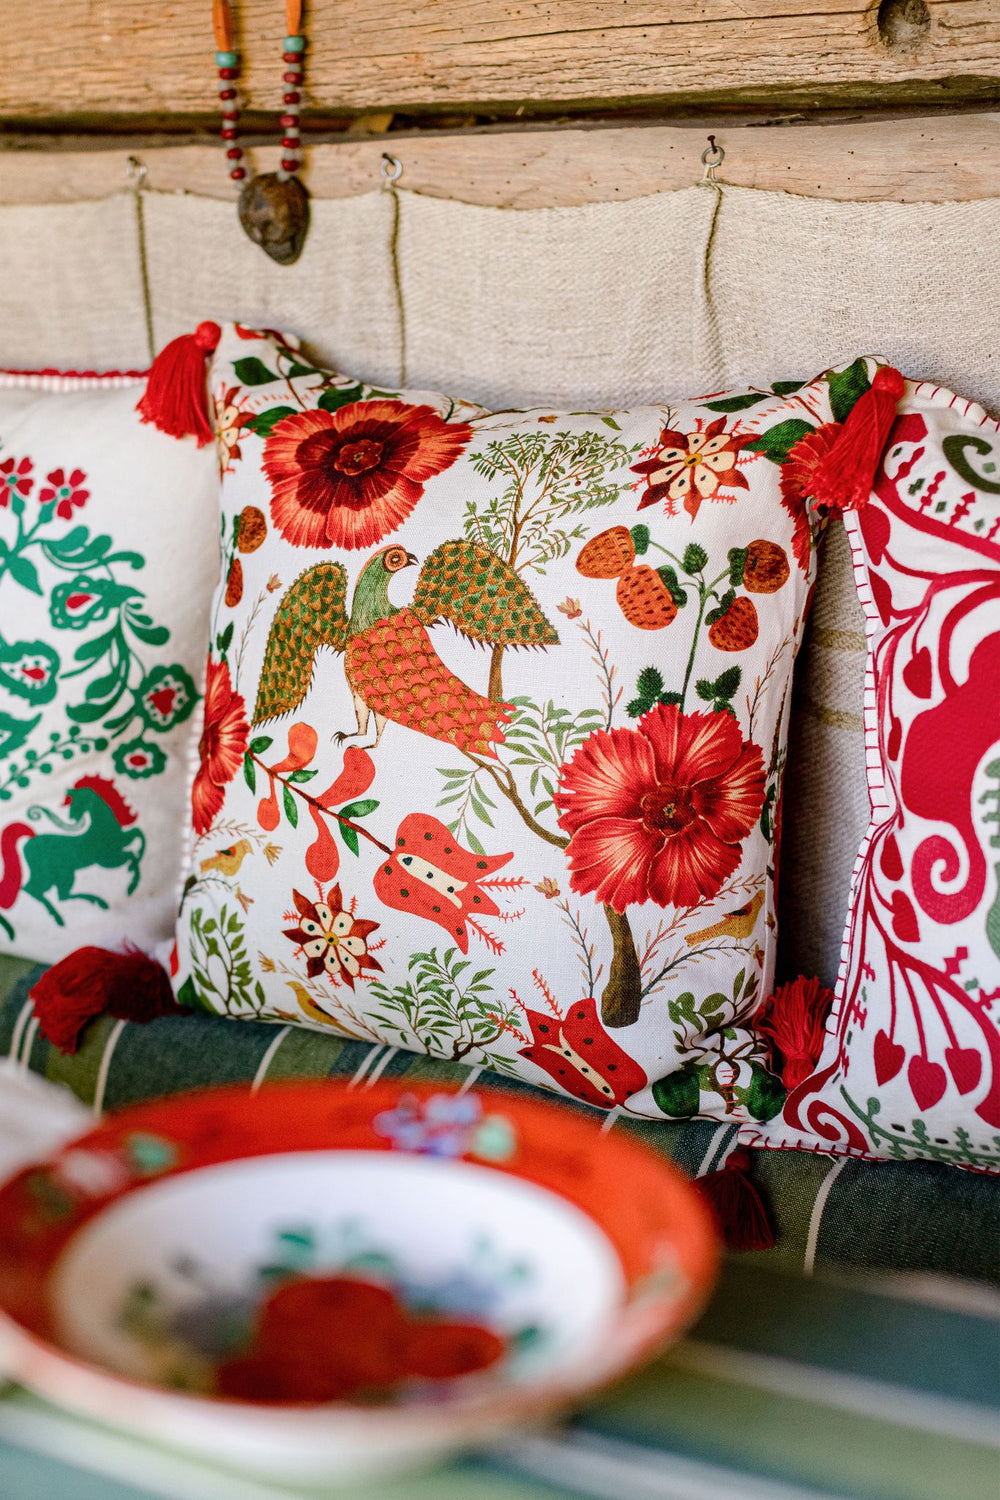 mind-the-gap-linen-cushion-red-green-white-red-tassel-pattern-cushion